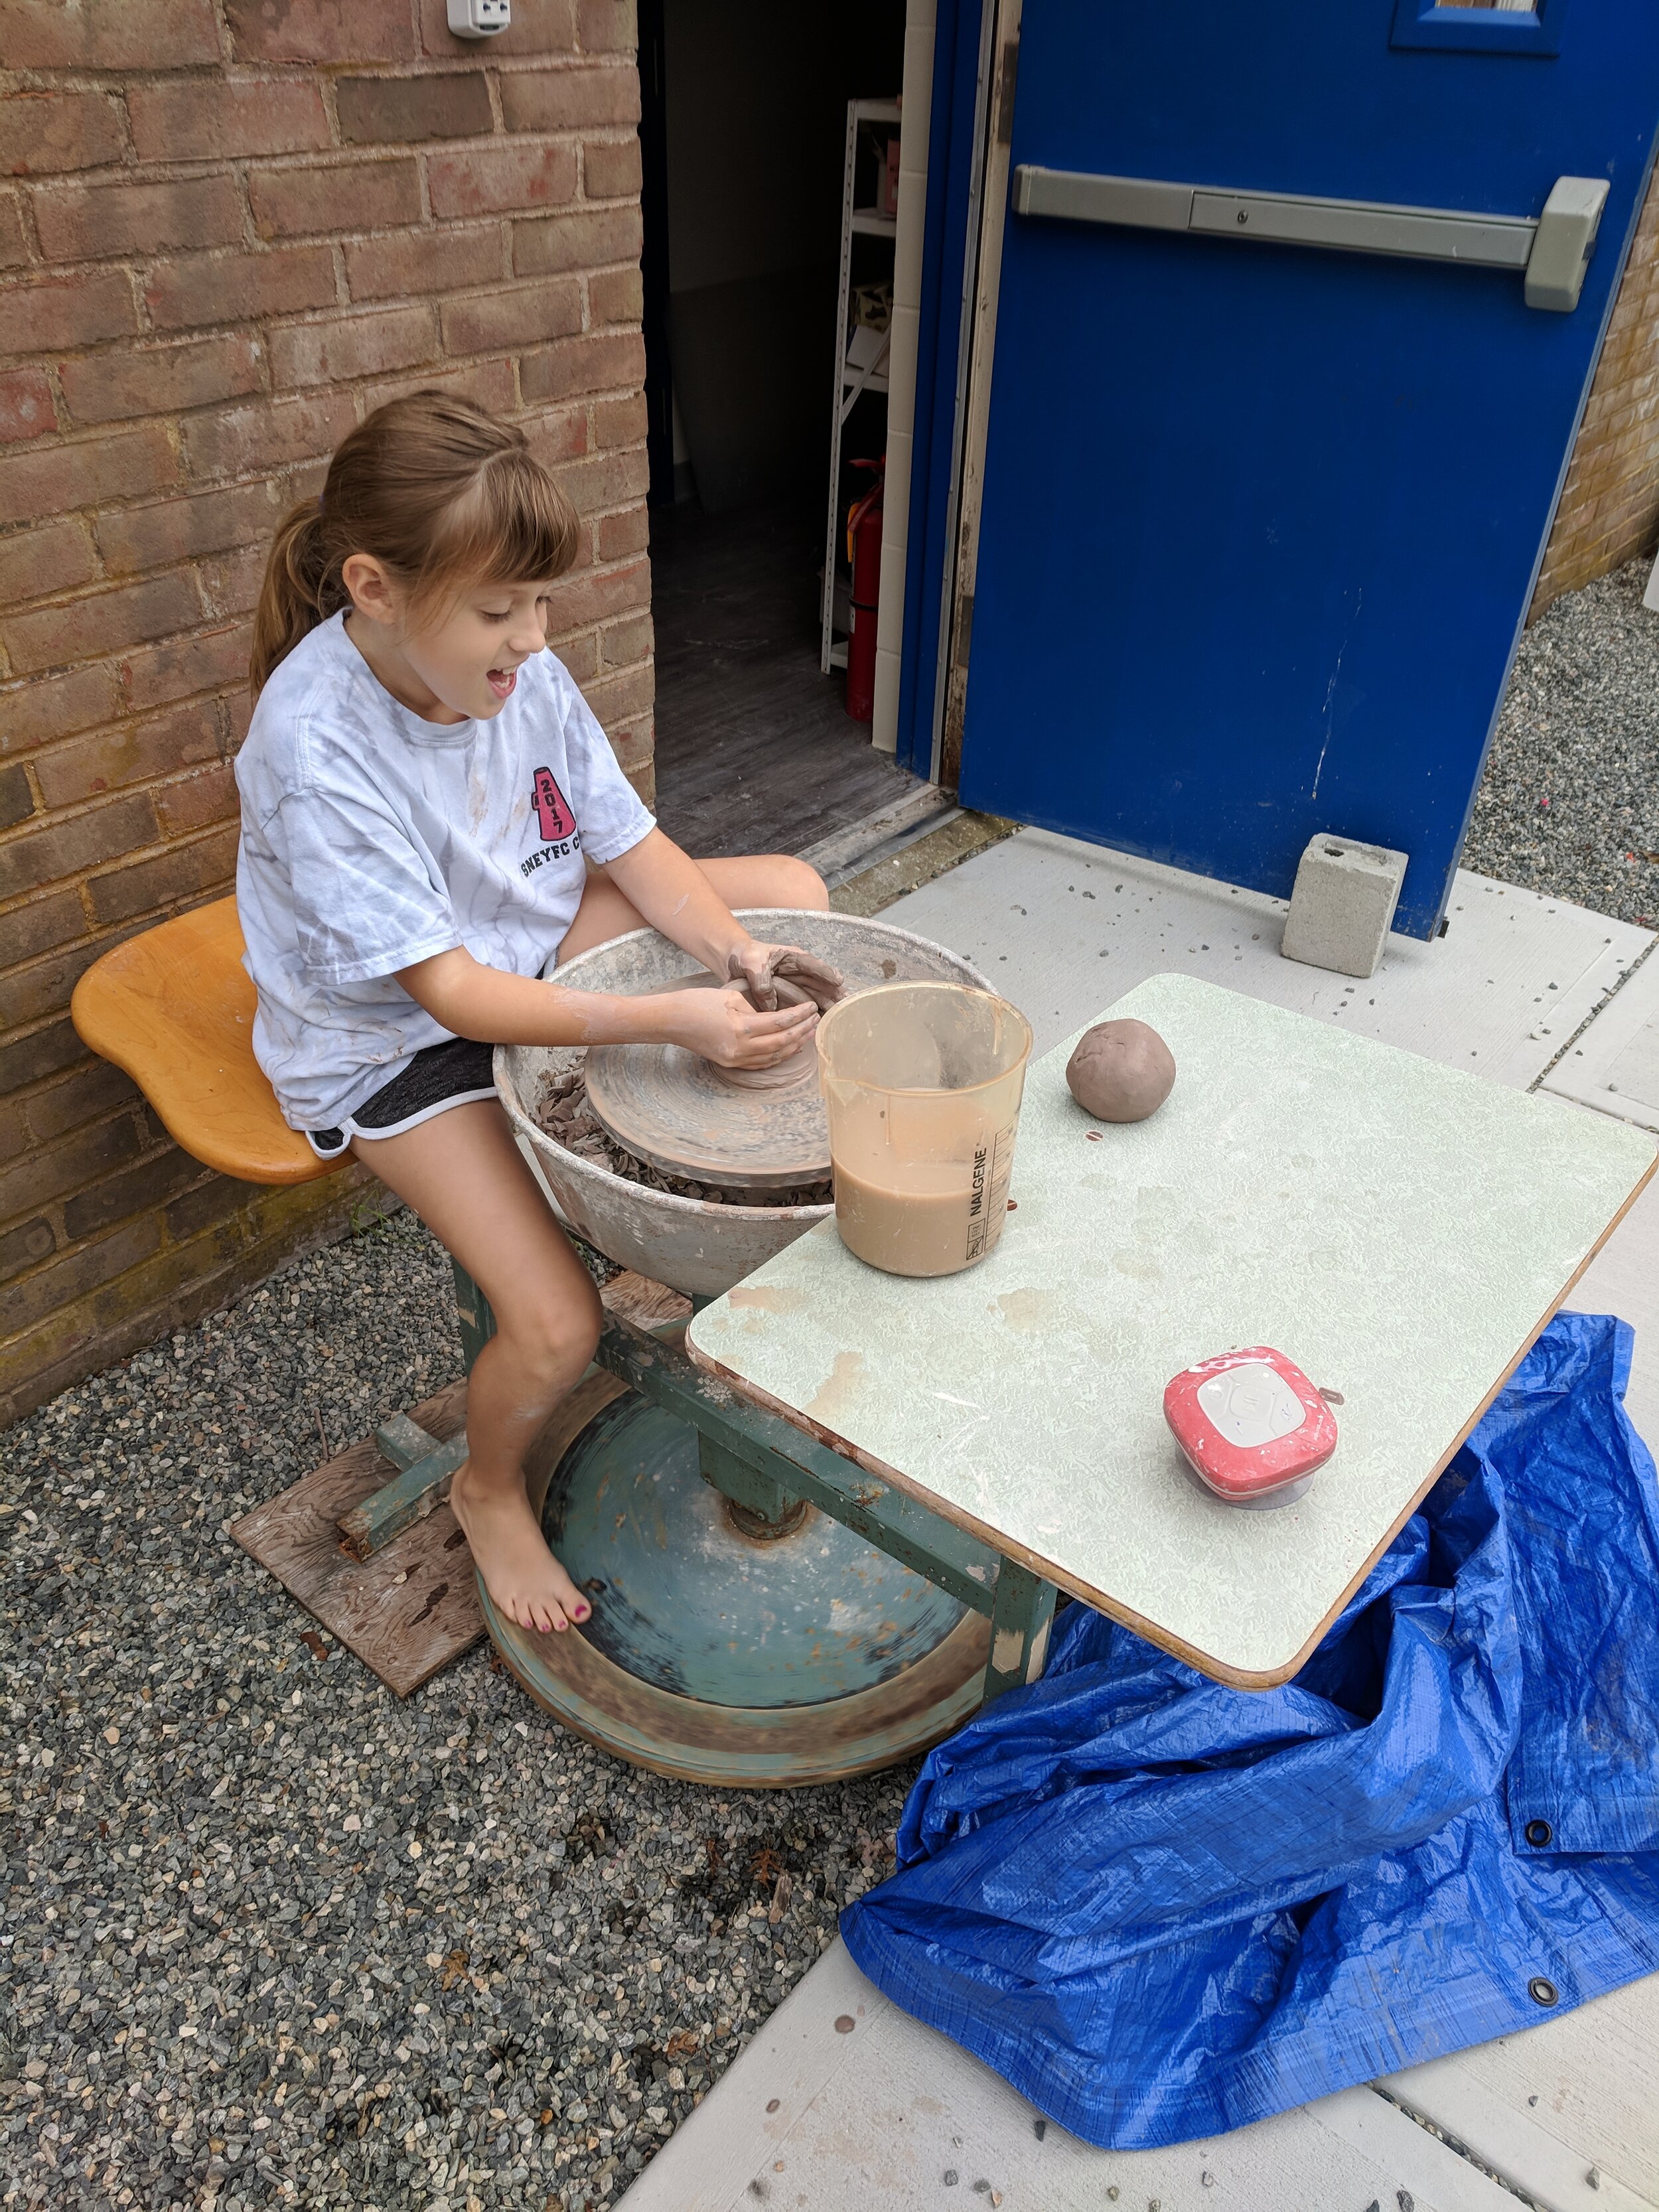 Pottery Studio — The Stonington Community Center